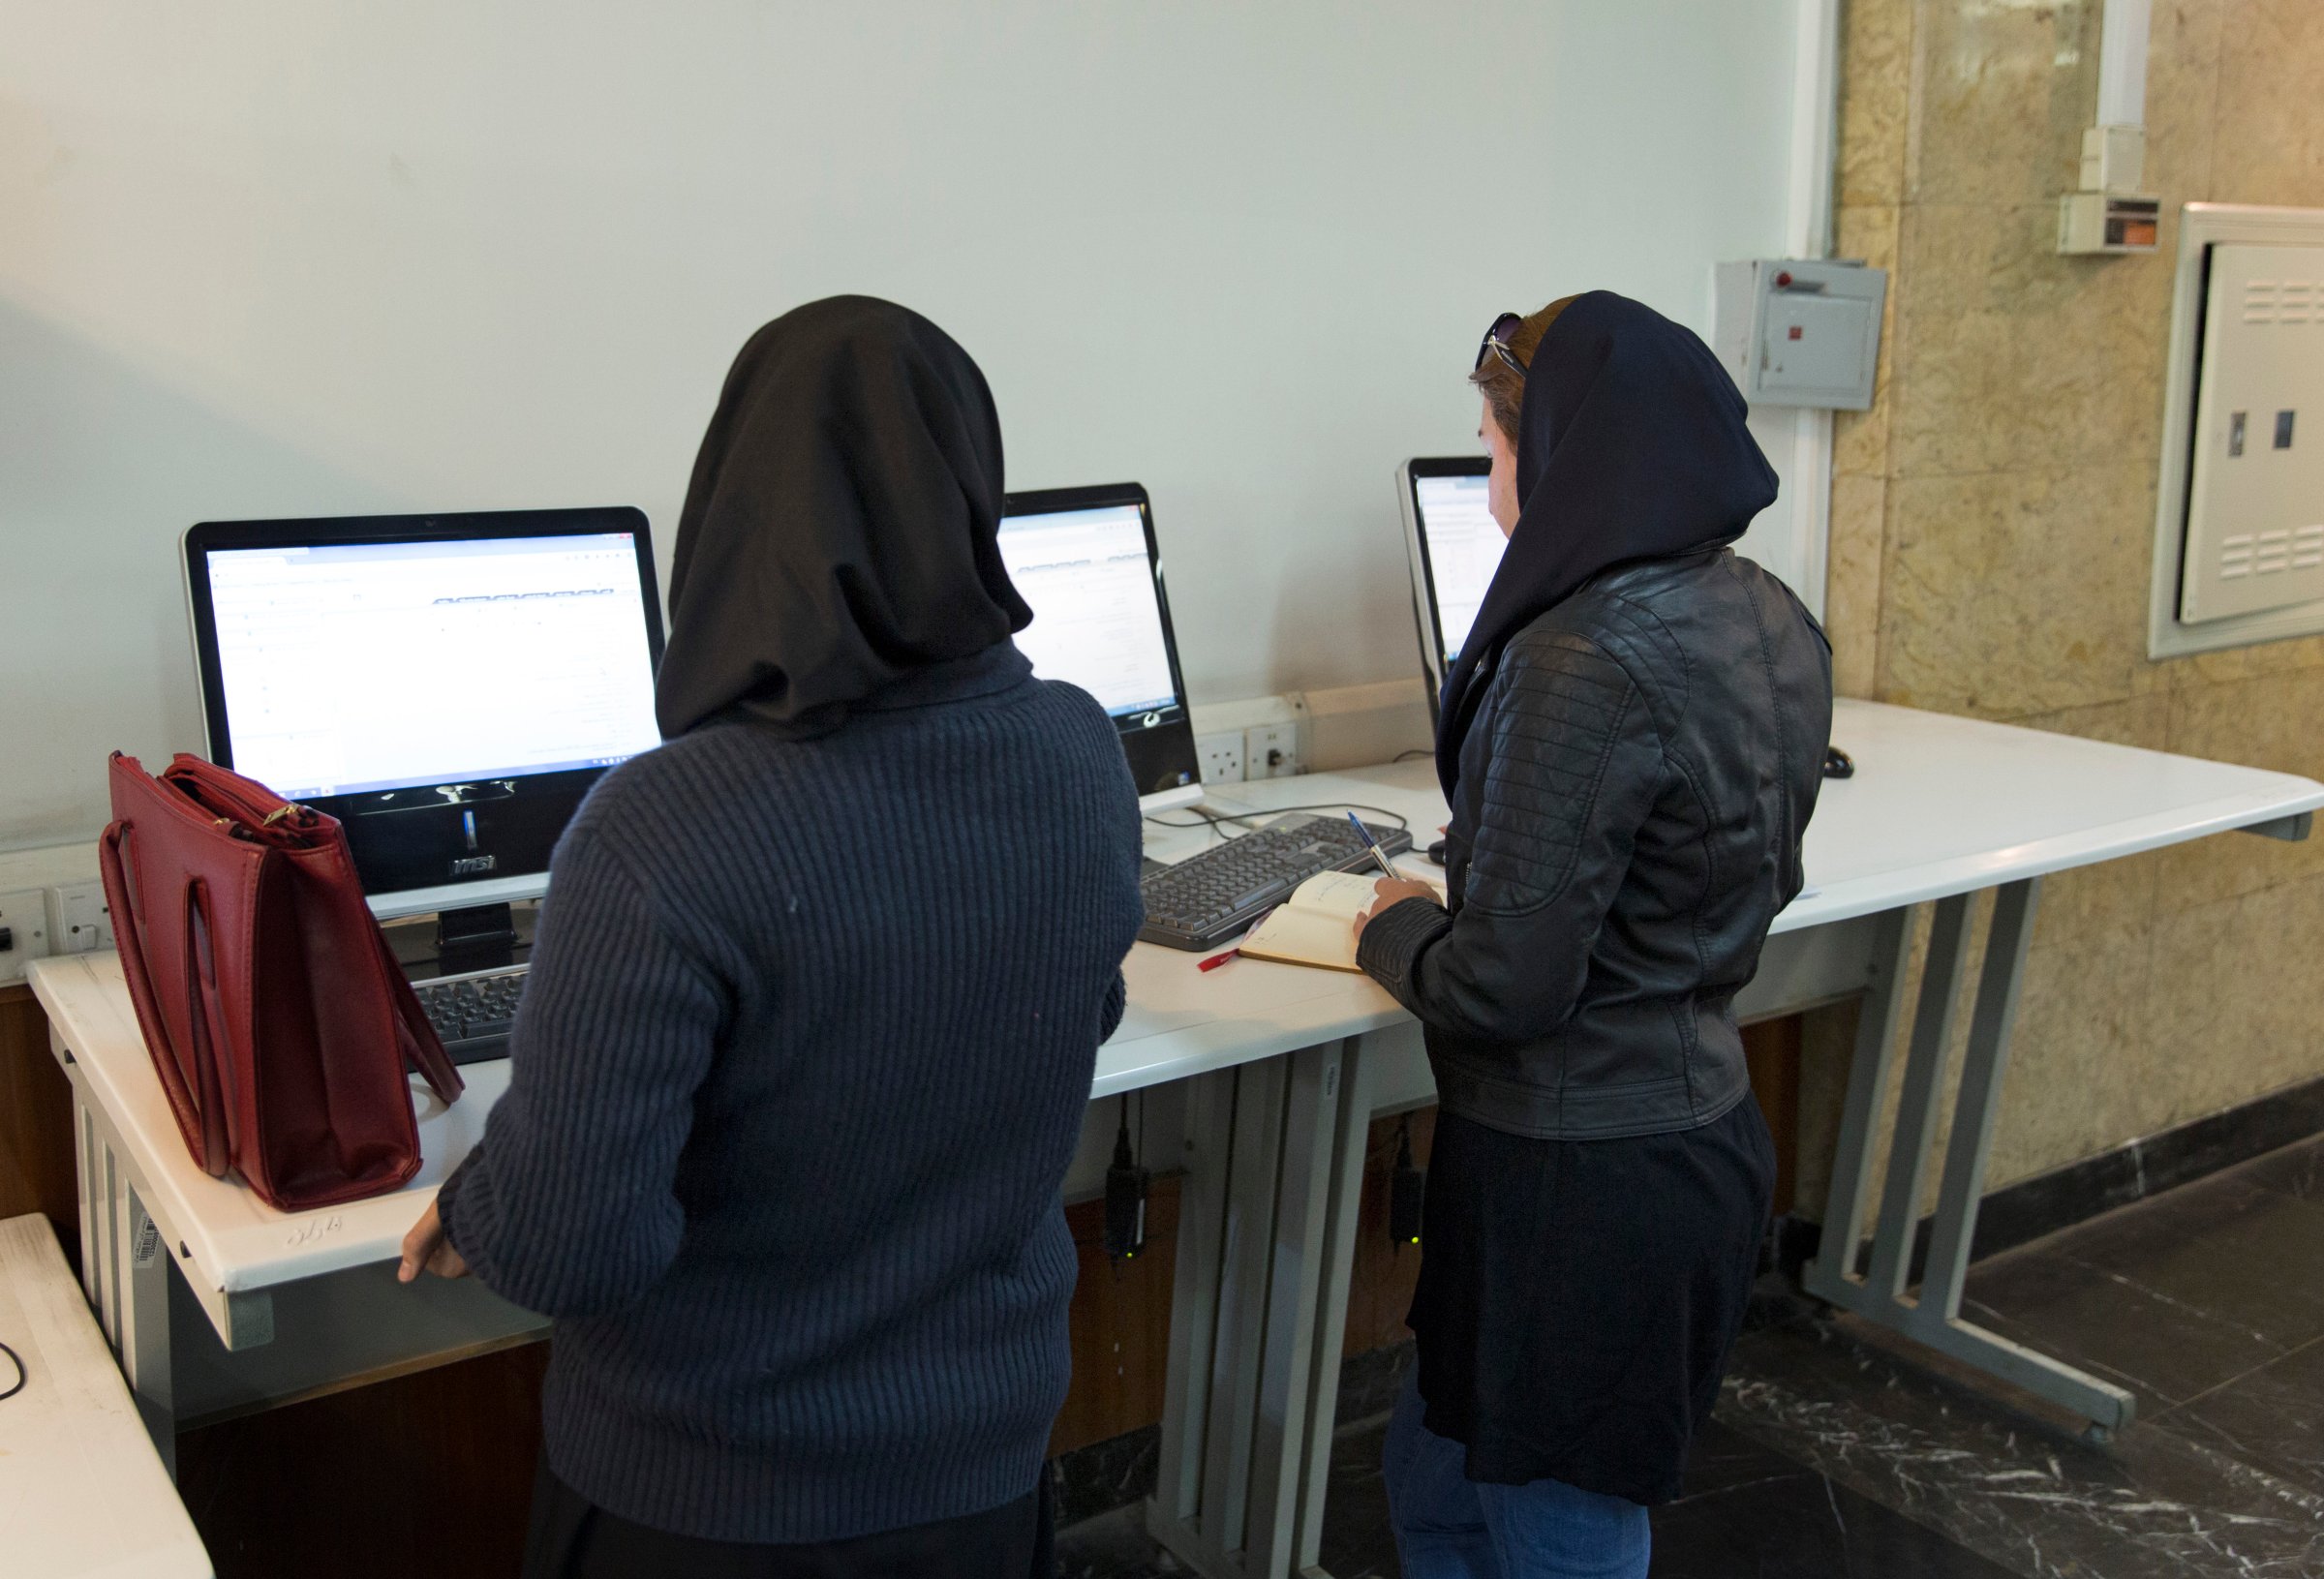 Students work with computers at Teheran University on October 18, 2015 in Teheran, Iran.